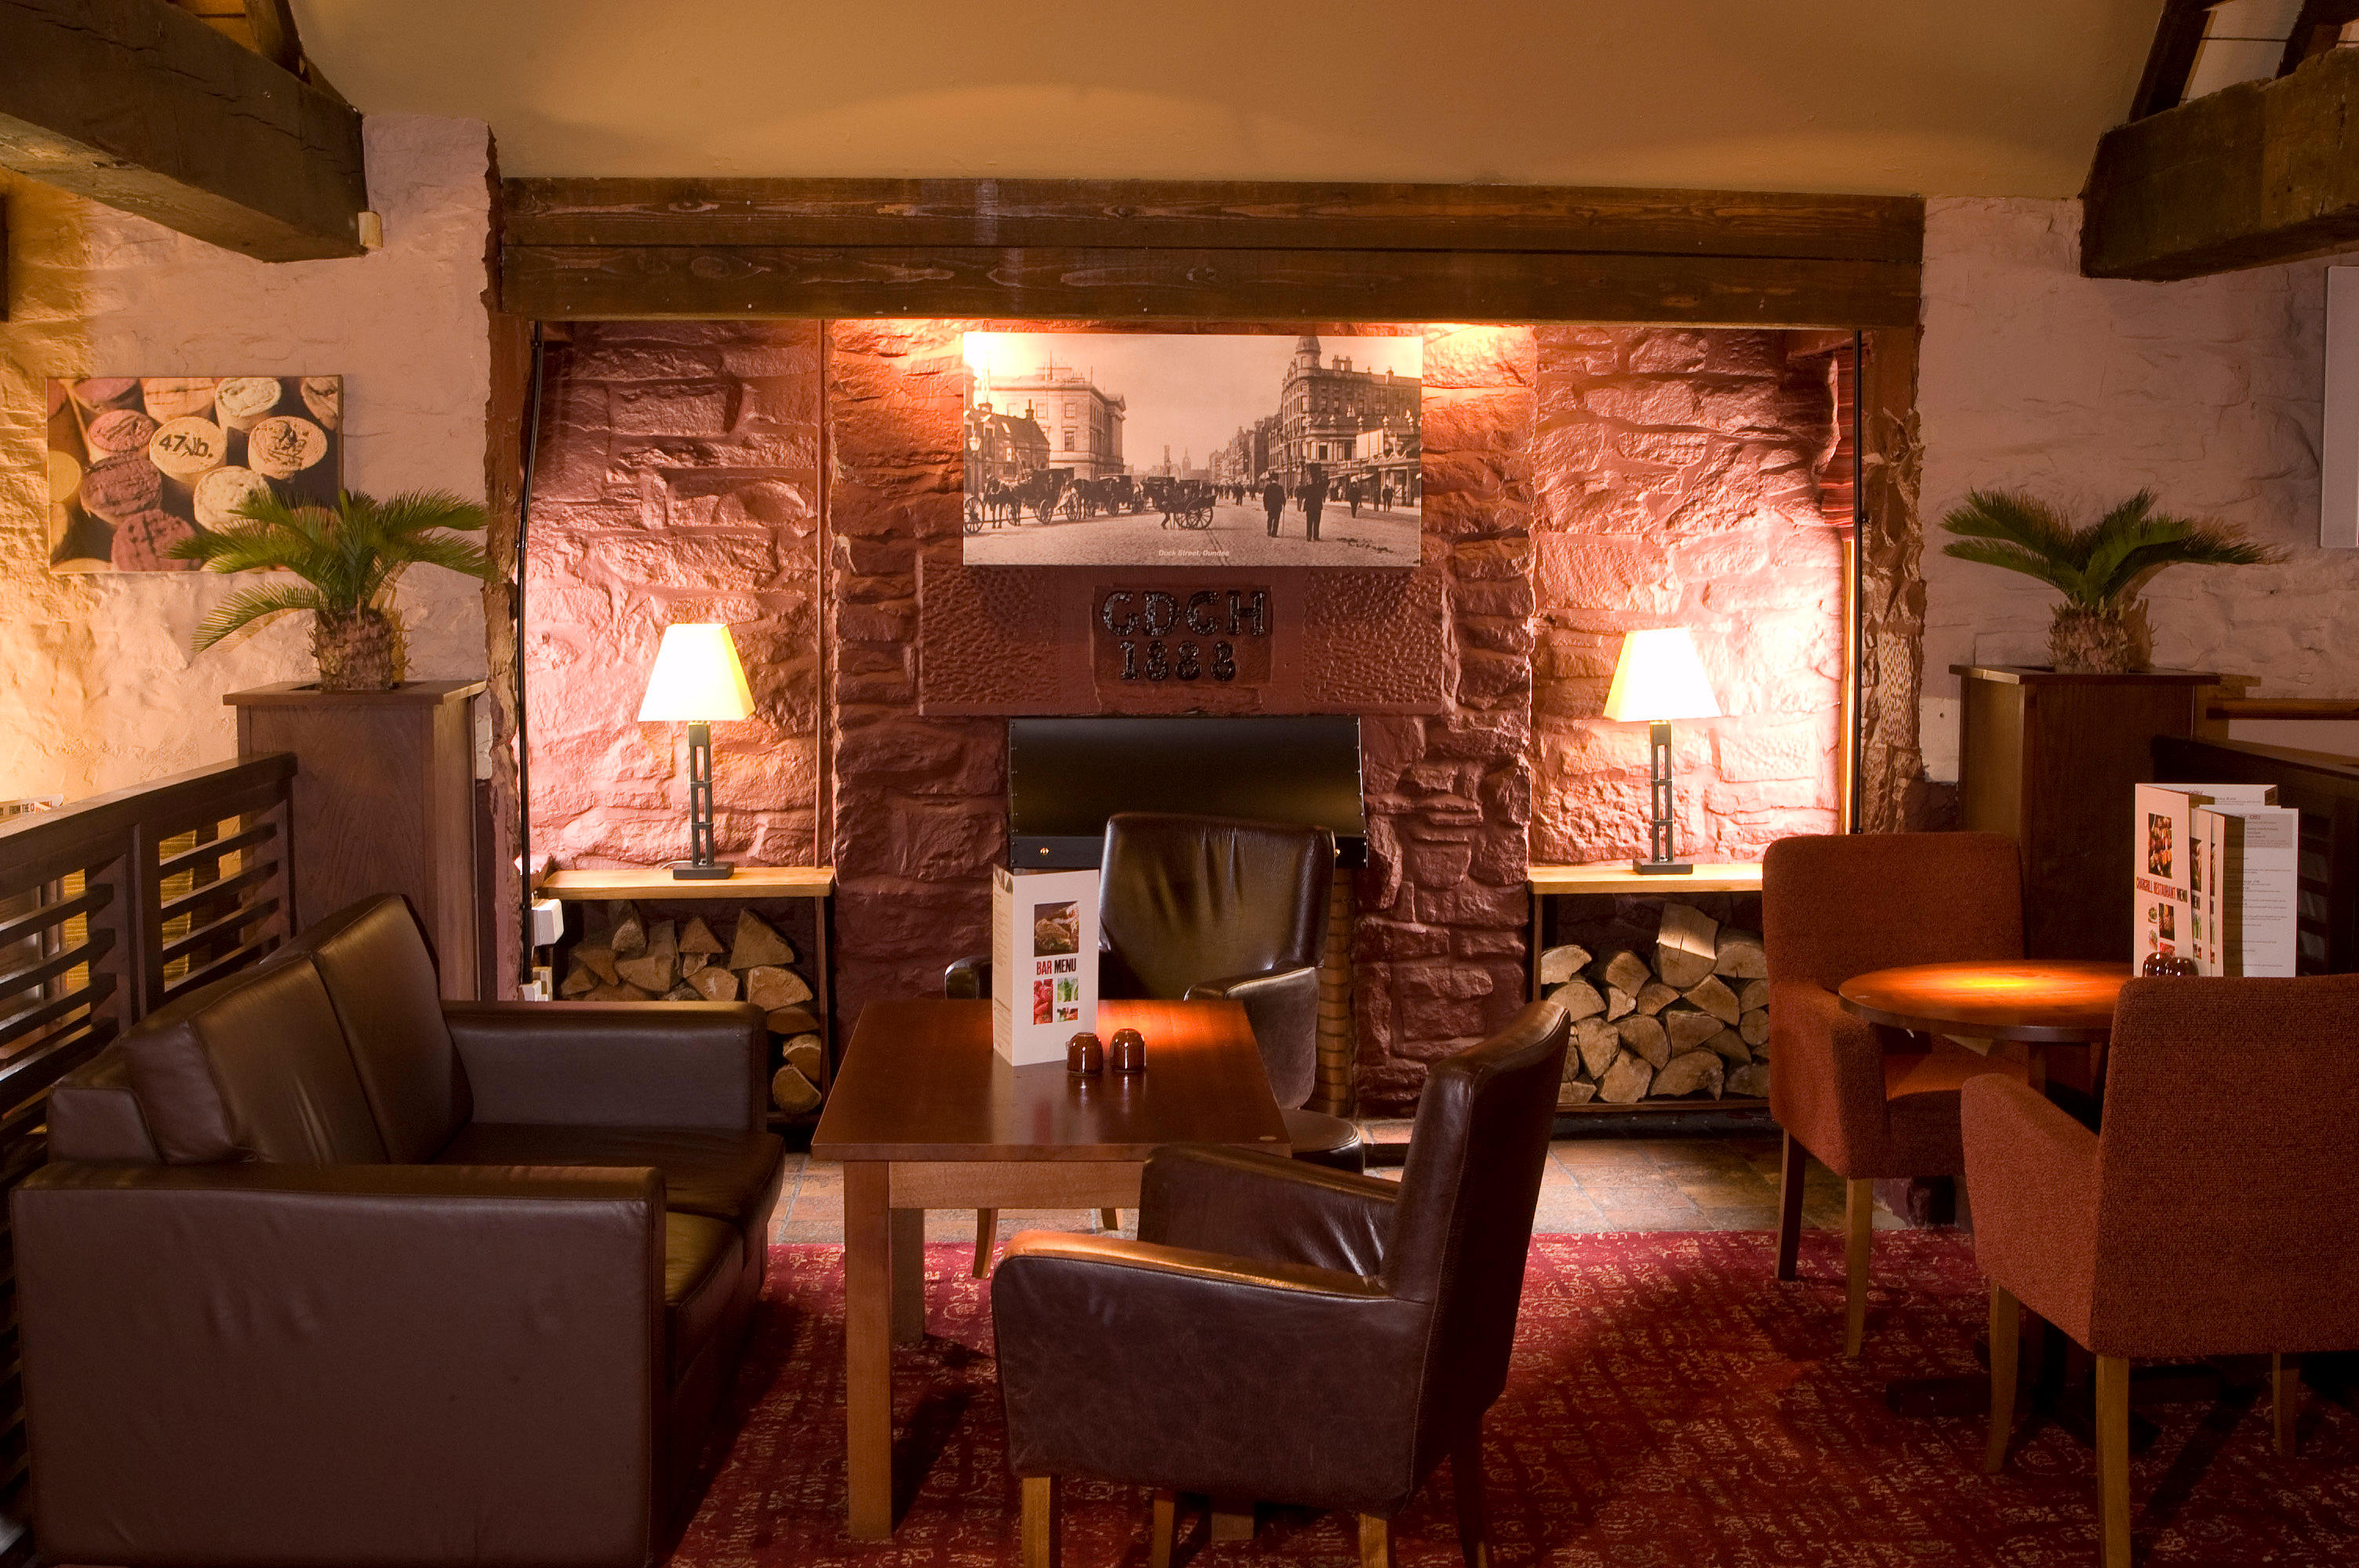 Beefeater restaurant interior Premier Inn Dundee West hotel Dundee 03337 774659